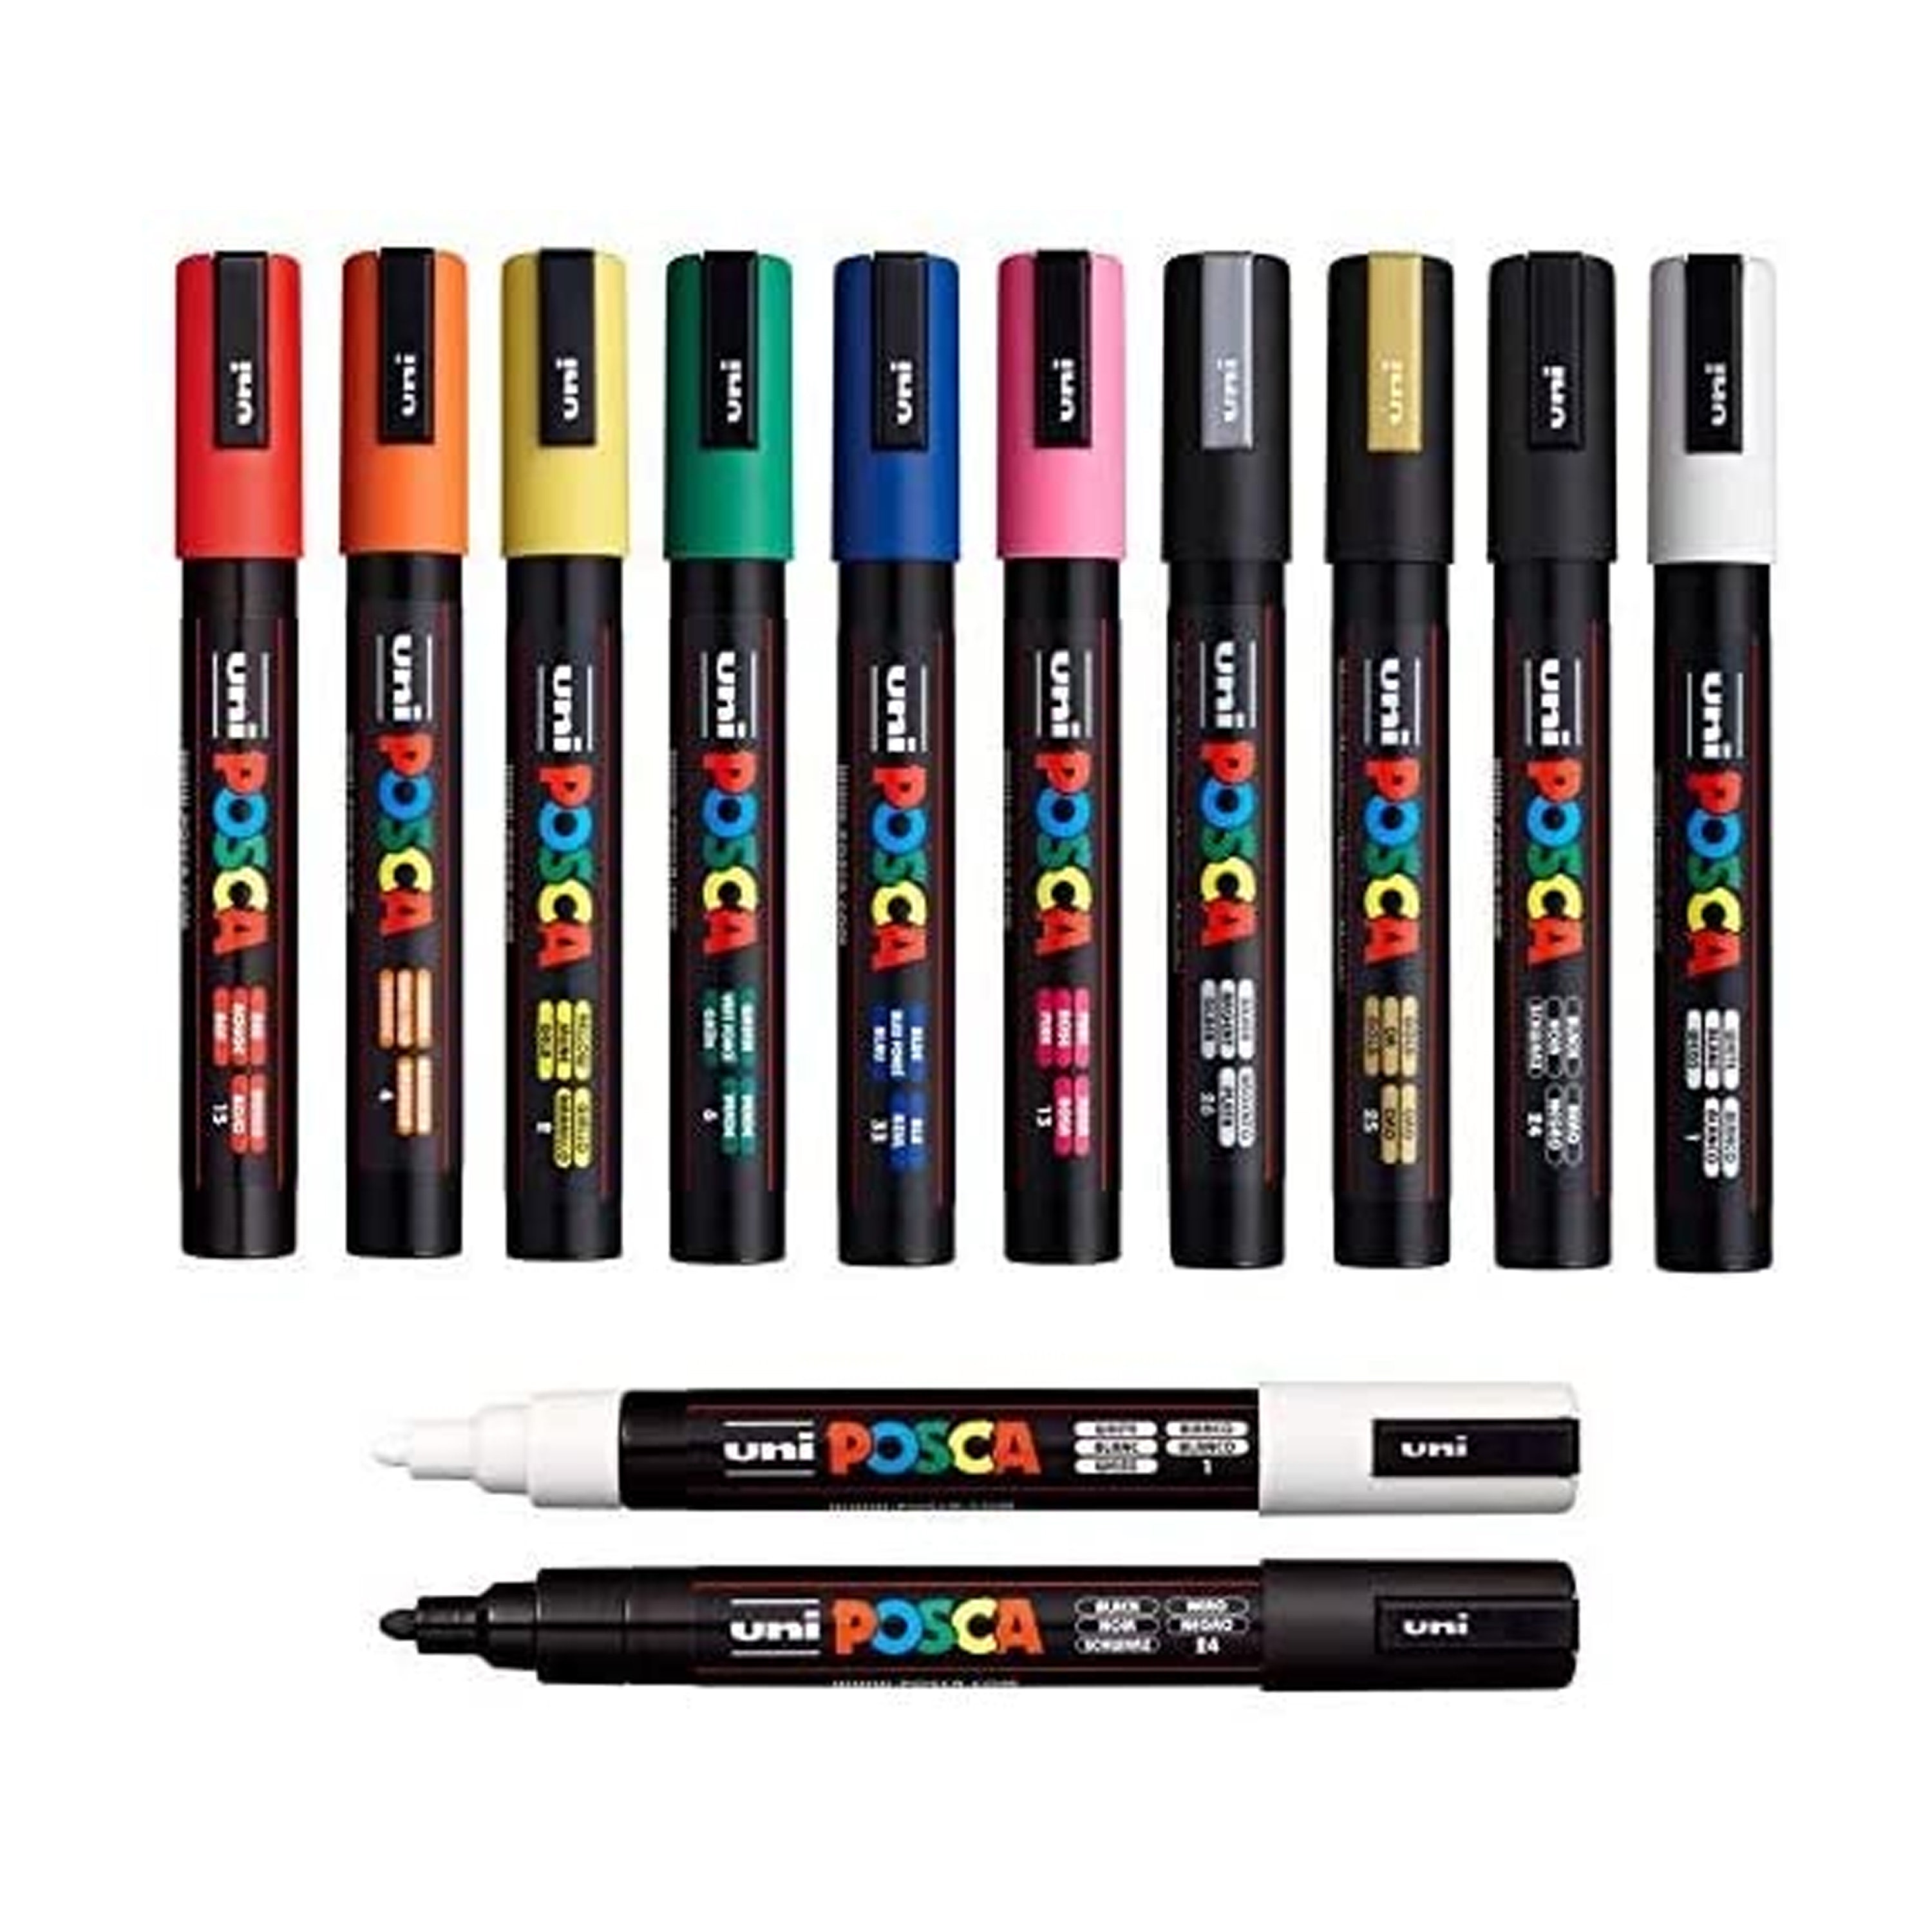 PC-5M Black/White Set of 4 Uni Posca Paint Marker 1.8-2.5mm Bullet Tip Pen 